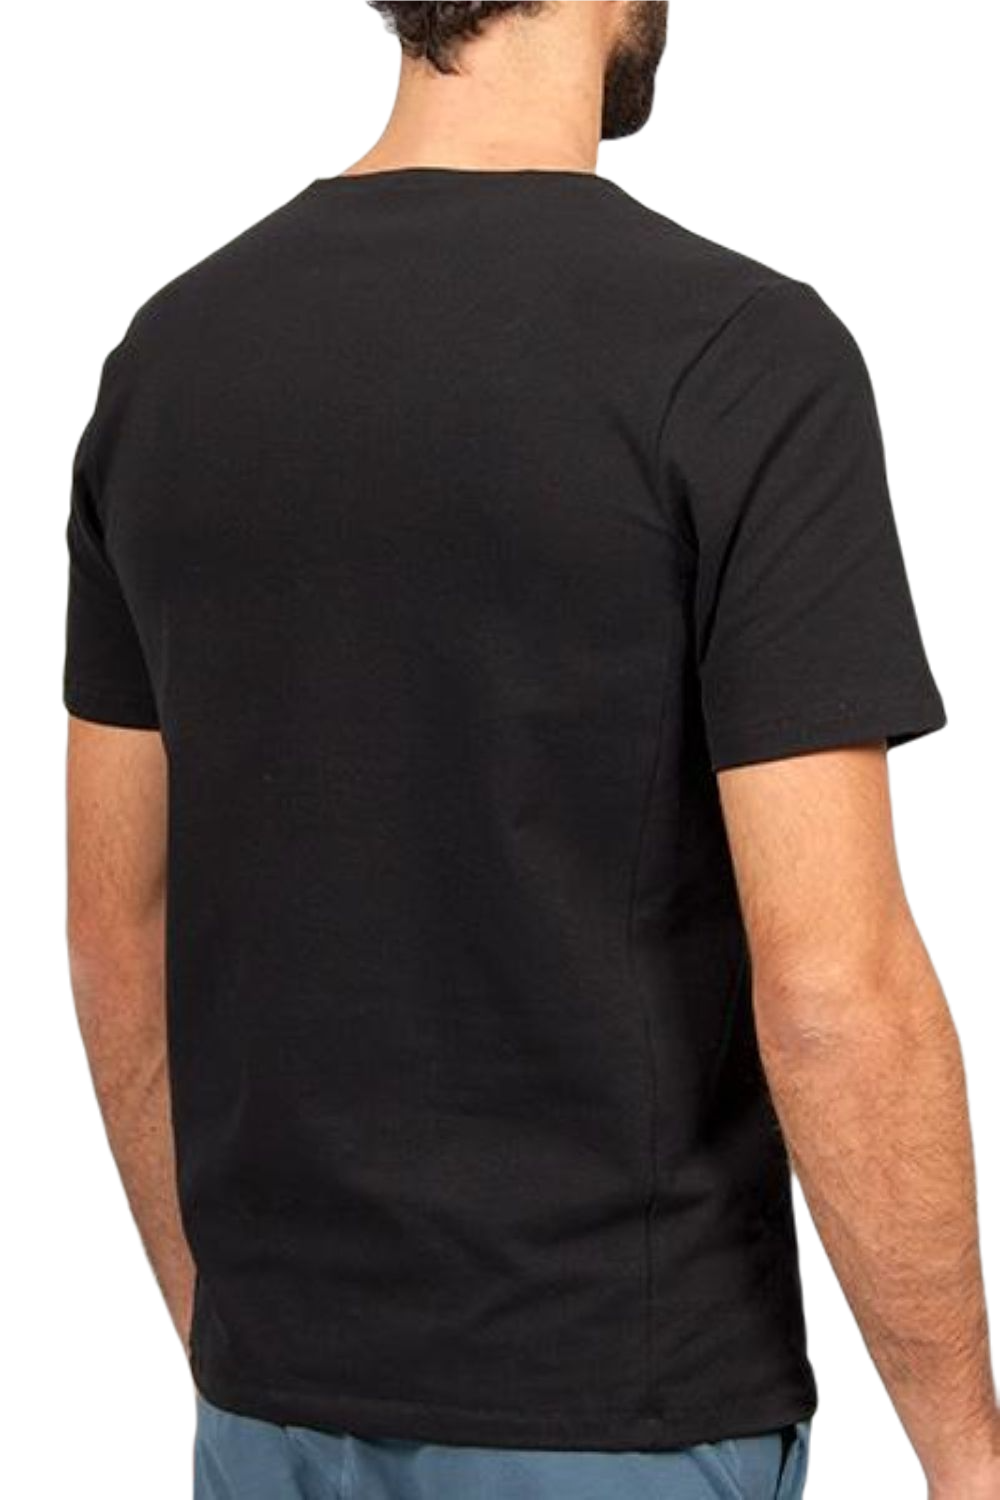 Mahan Shirt for Men Black